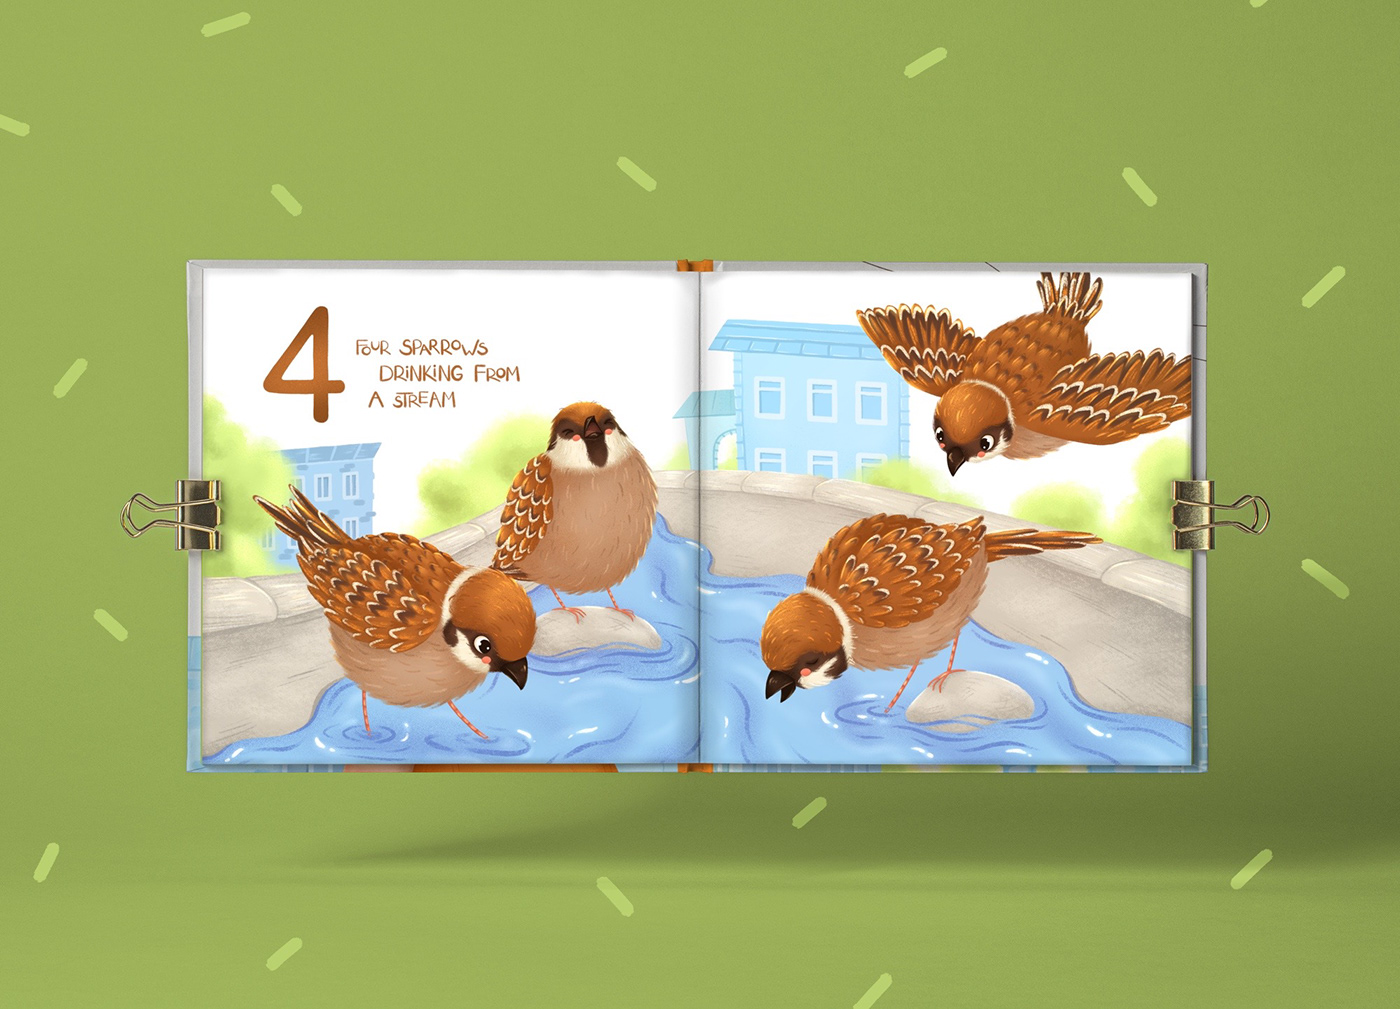 Children's book illustration. Four sparrows